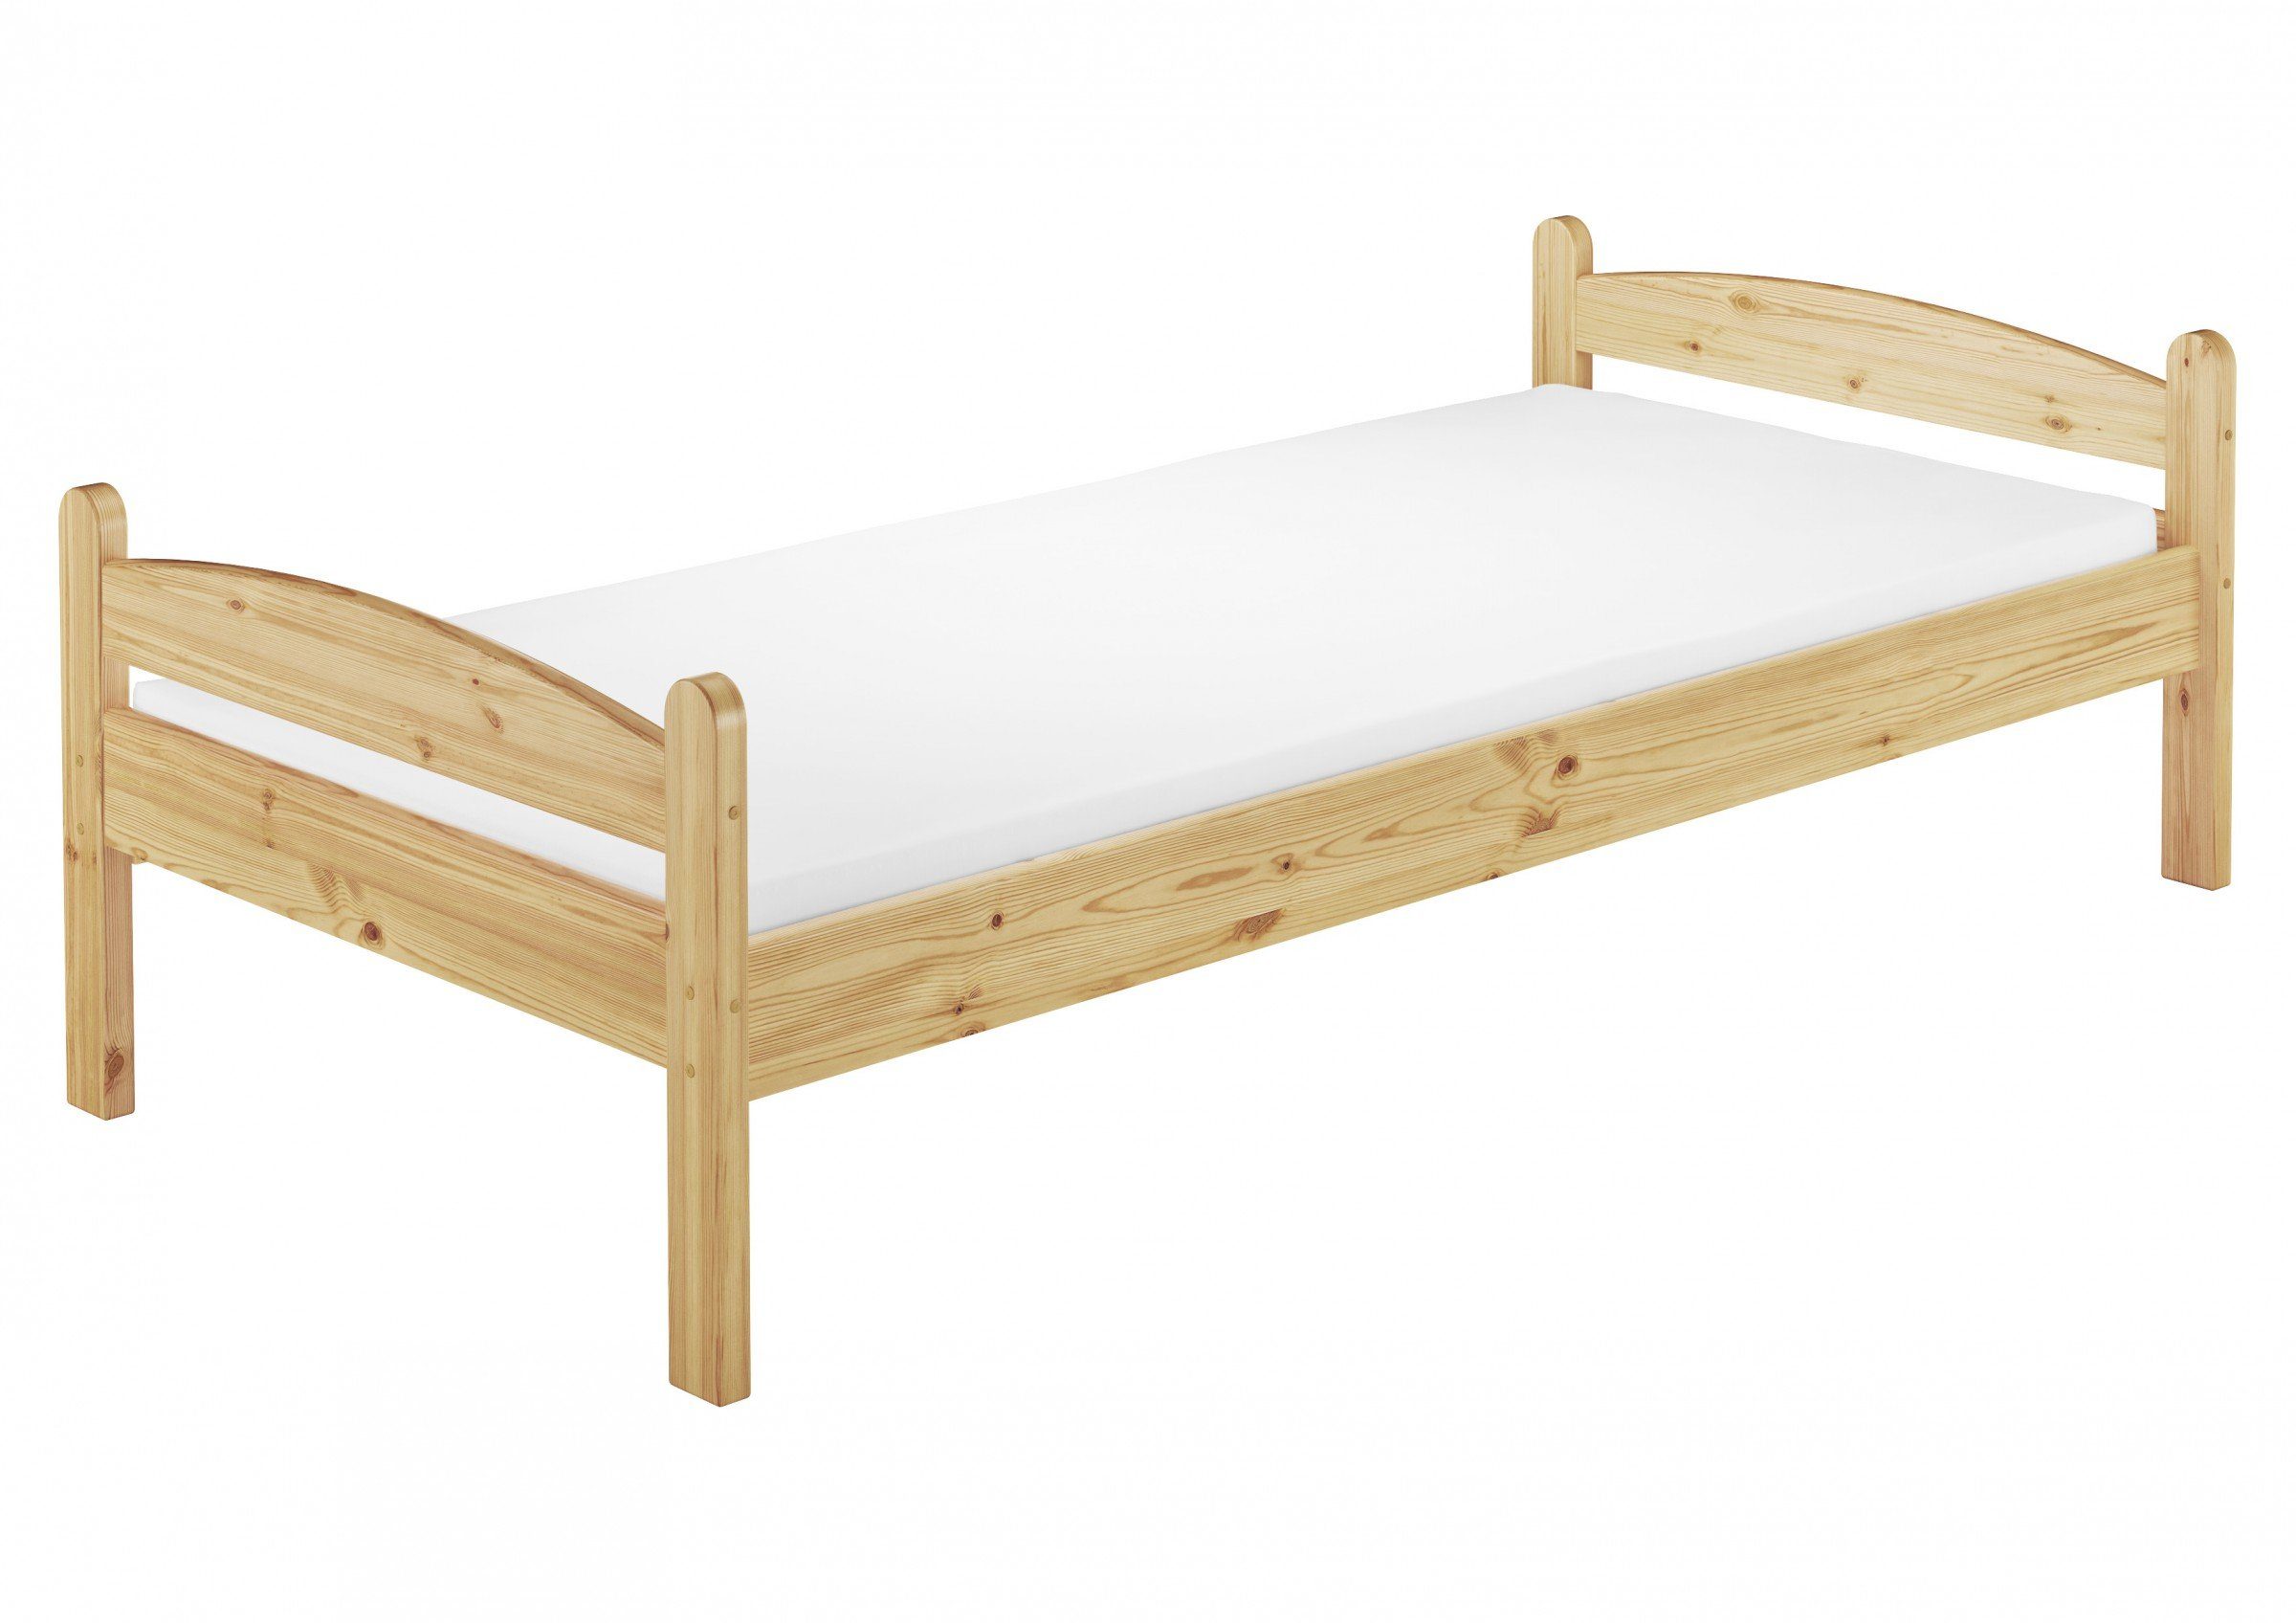 ERST-HOLZ Bett Jugendbett Kiefer massiv 90x200 mit Rost und Matratze, Kieferfarblos lackiert | Bettgestelle